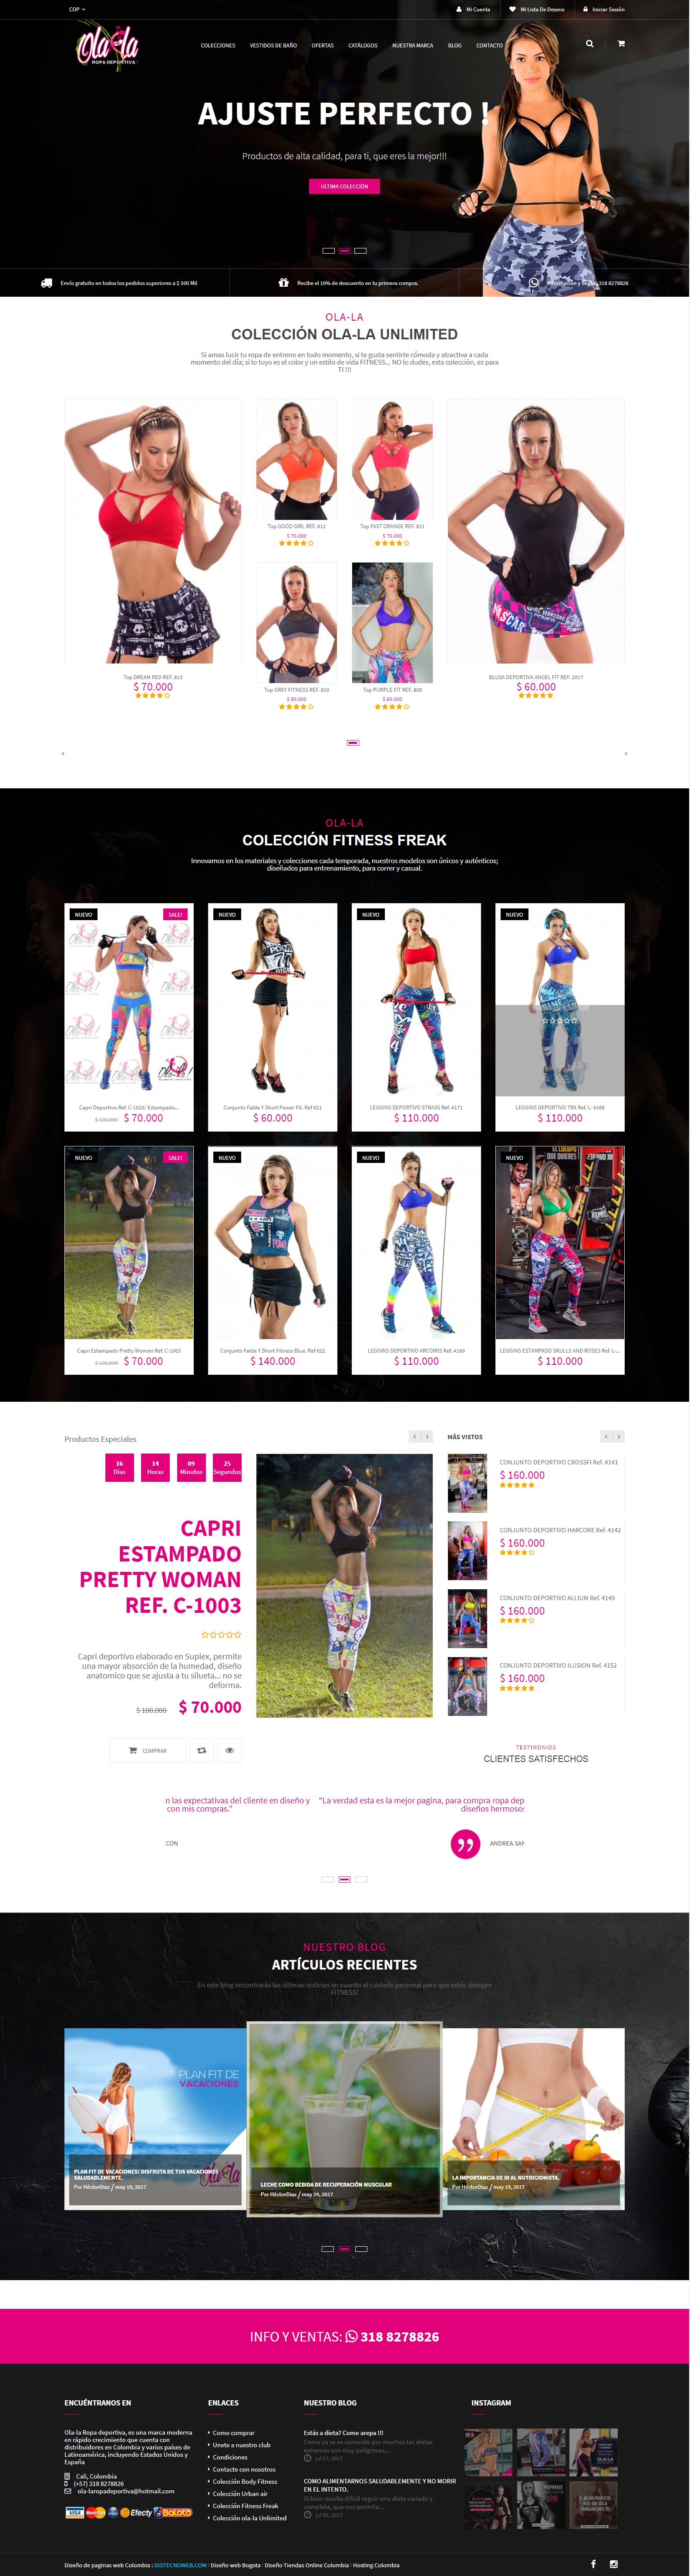 Tienda Onlinede ropa deportiva eb Colombia